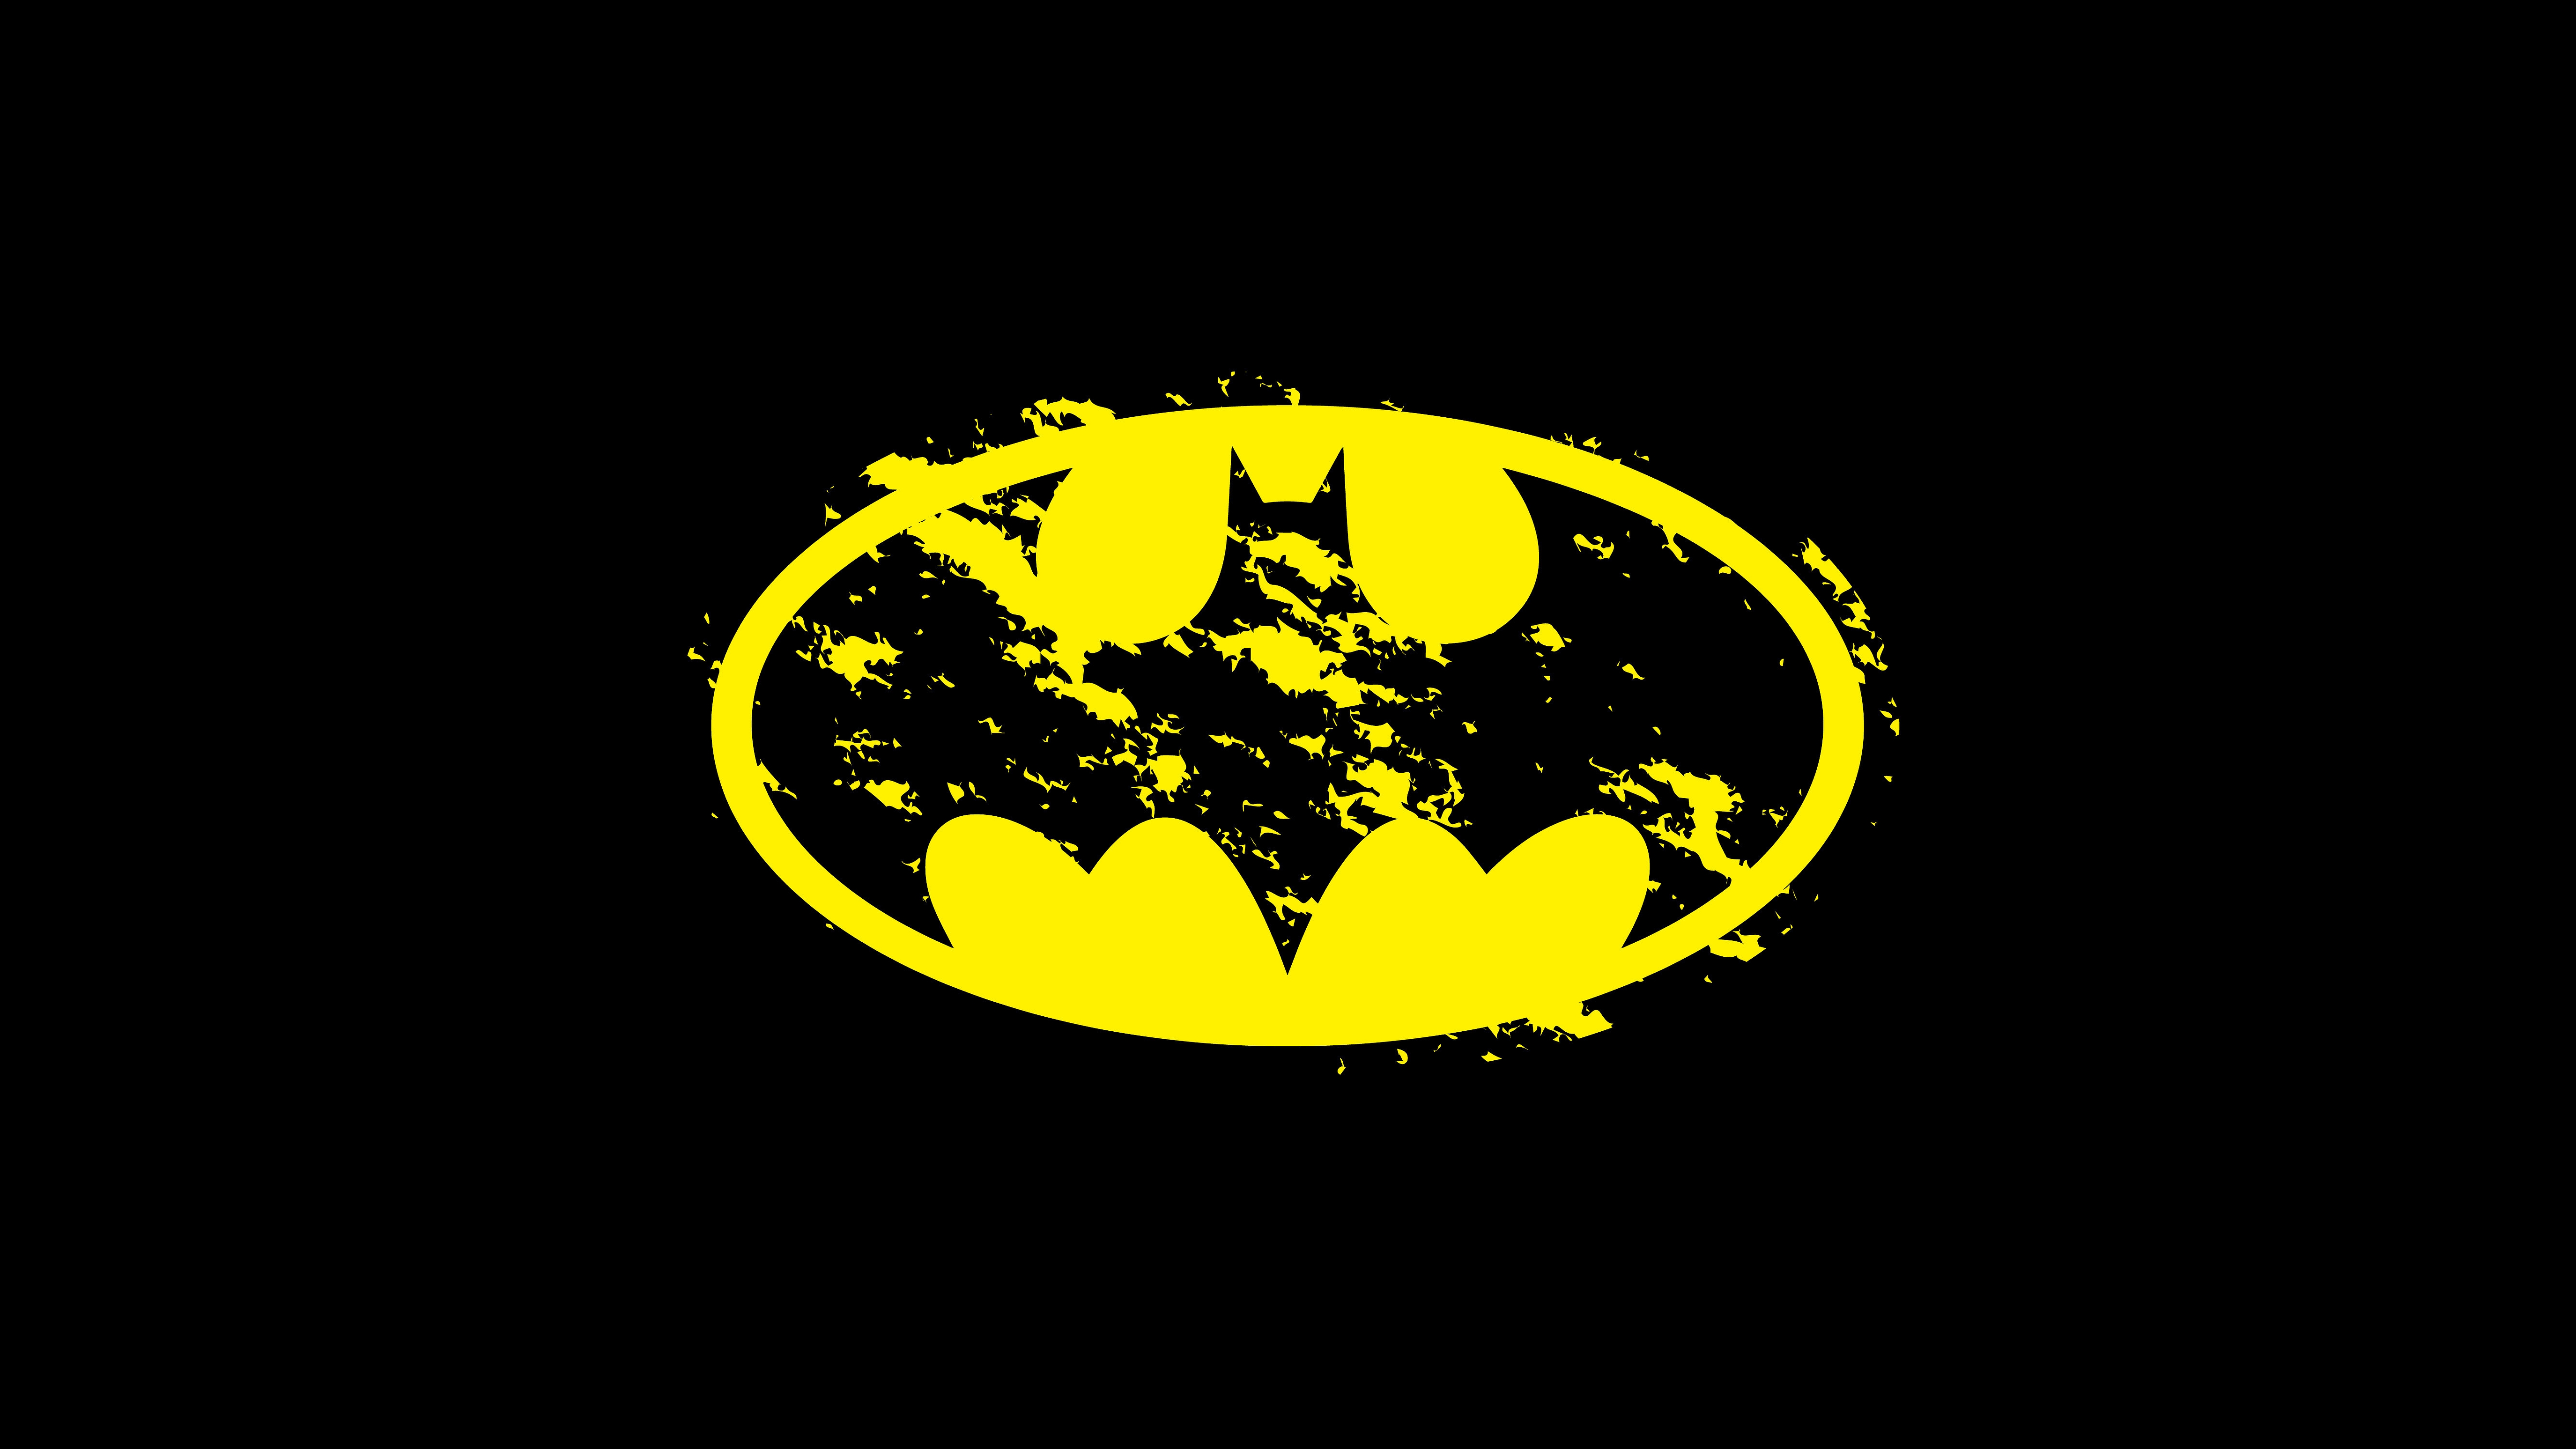 Batman Backgrounds New 2016 free download